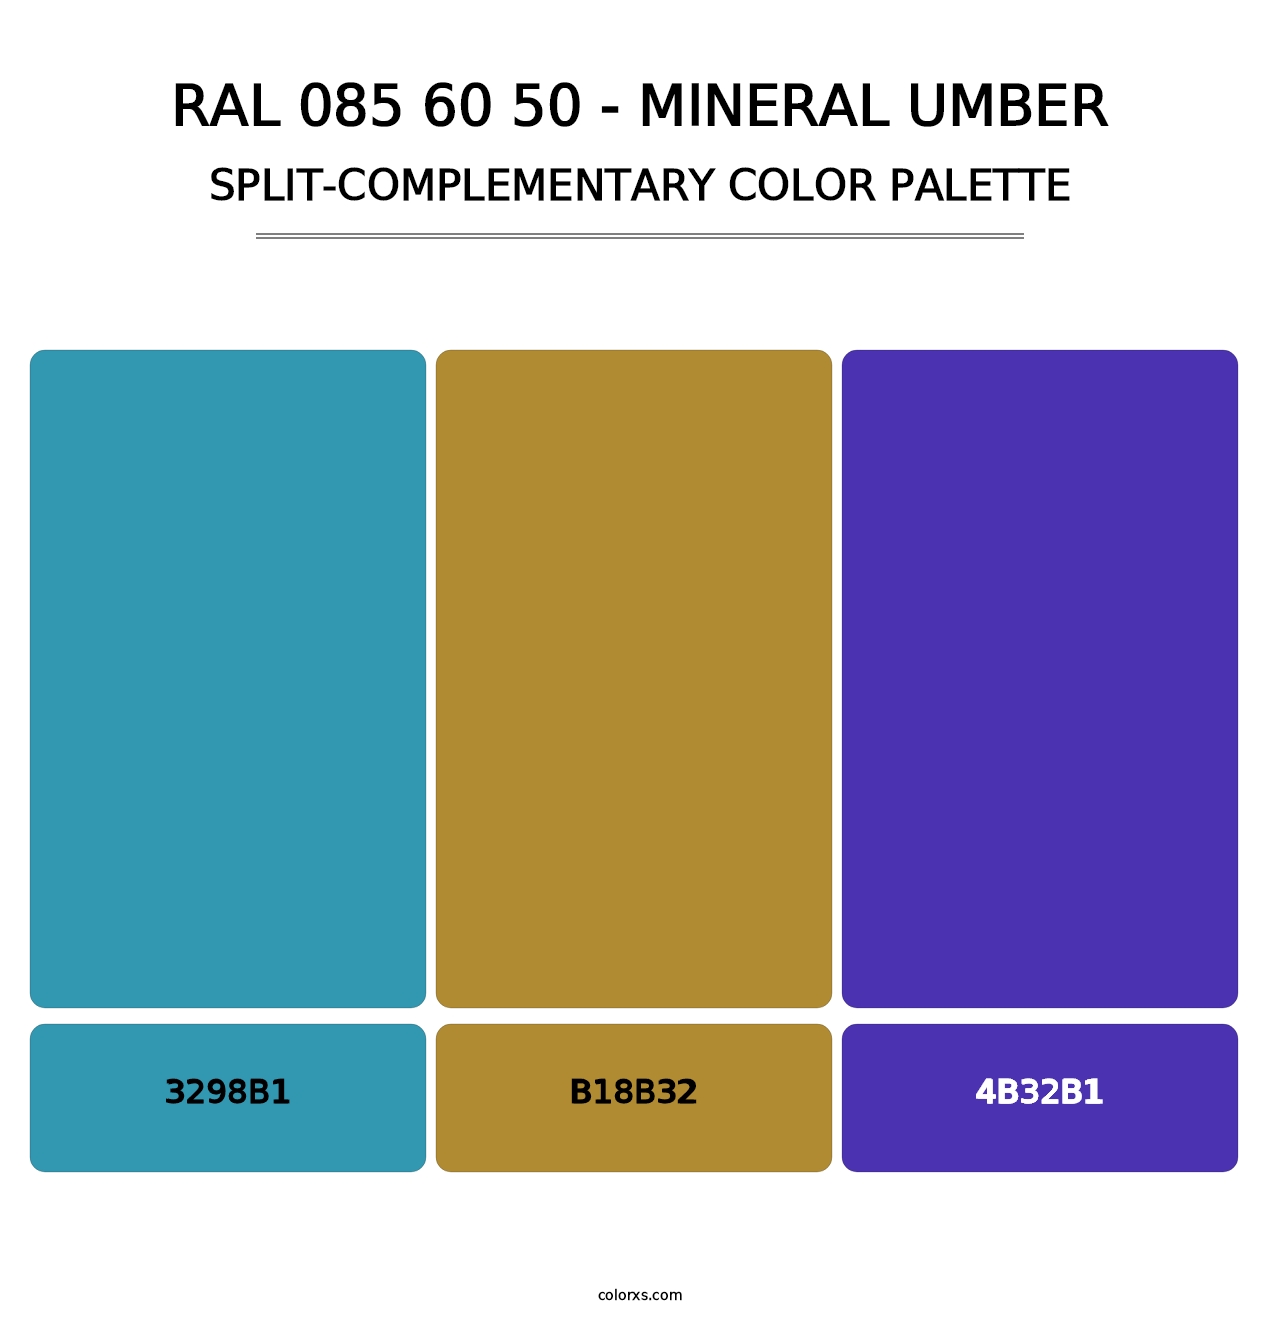 RAL 085 60 50 - Mineral Umber - Split-Complementary Color Palette